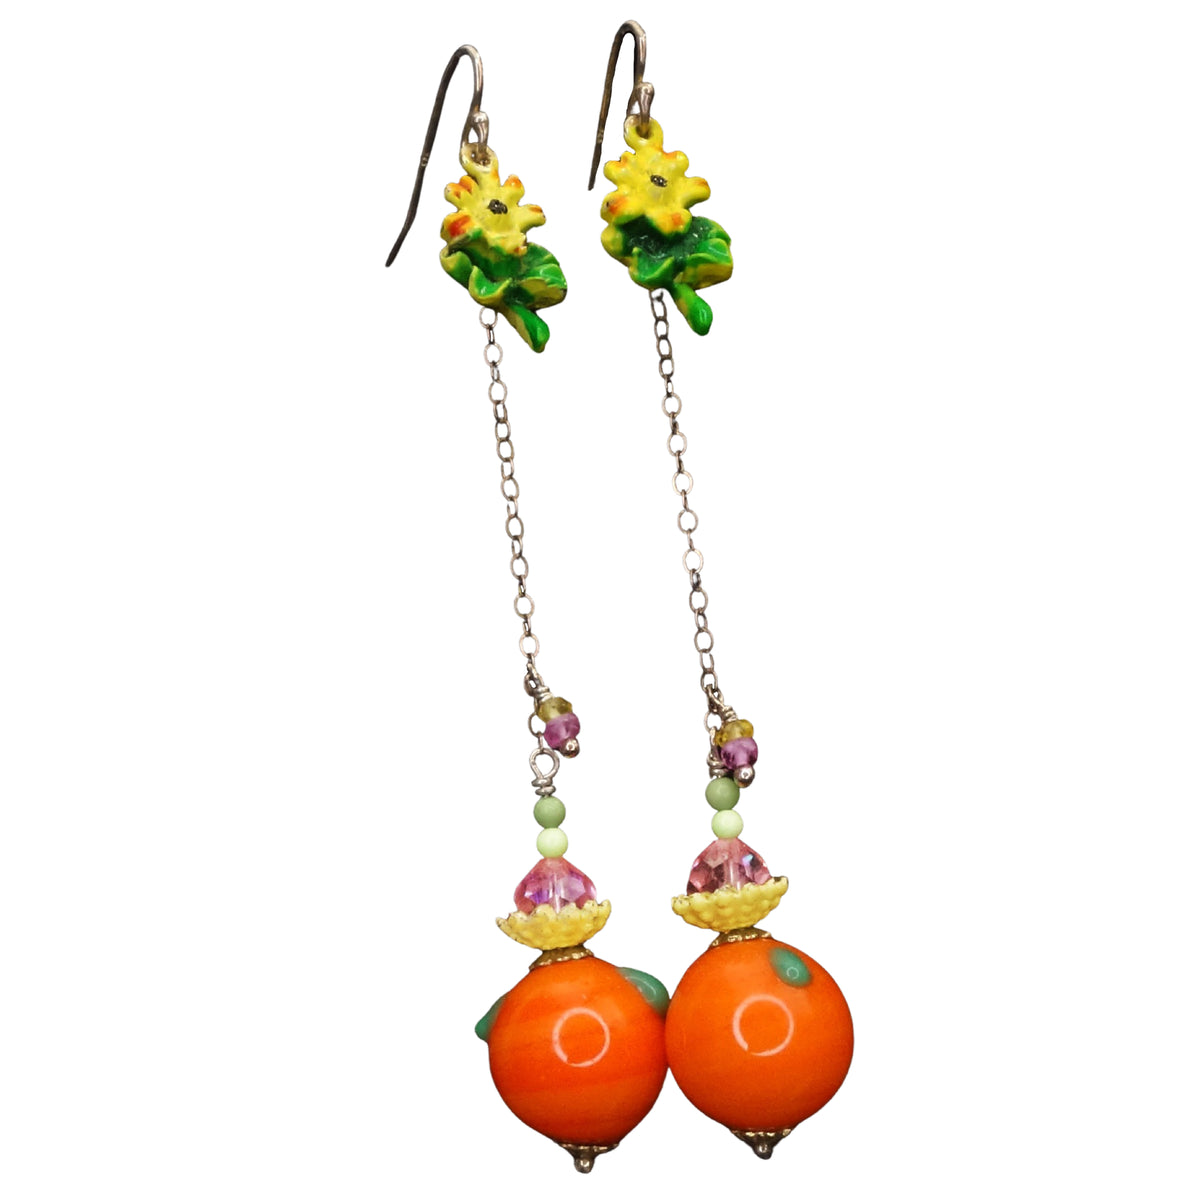 Too Many Oranges, Mama: carnelian, citrine, vintage glass earrings